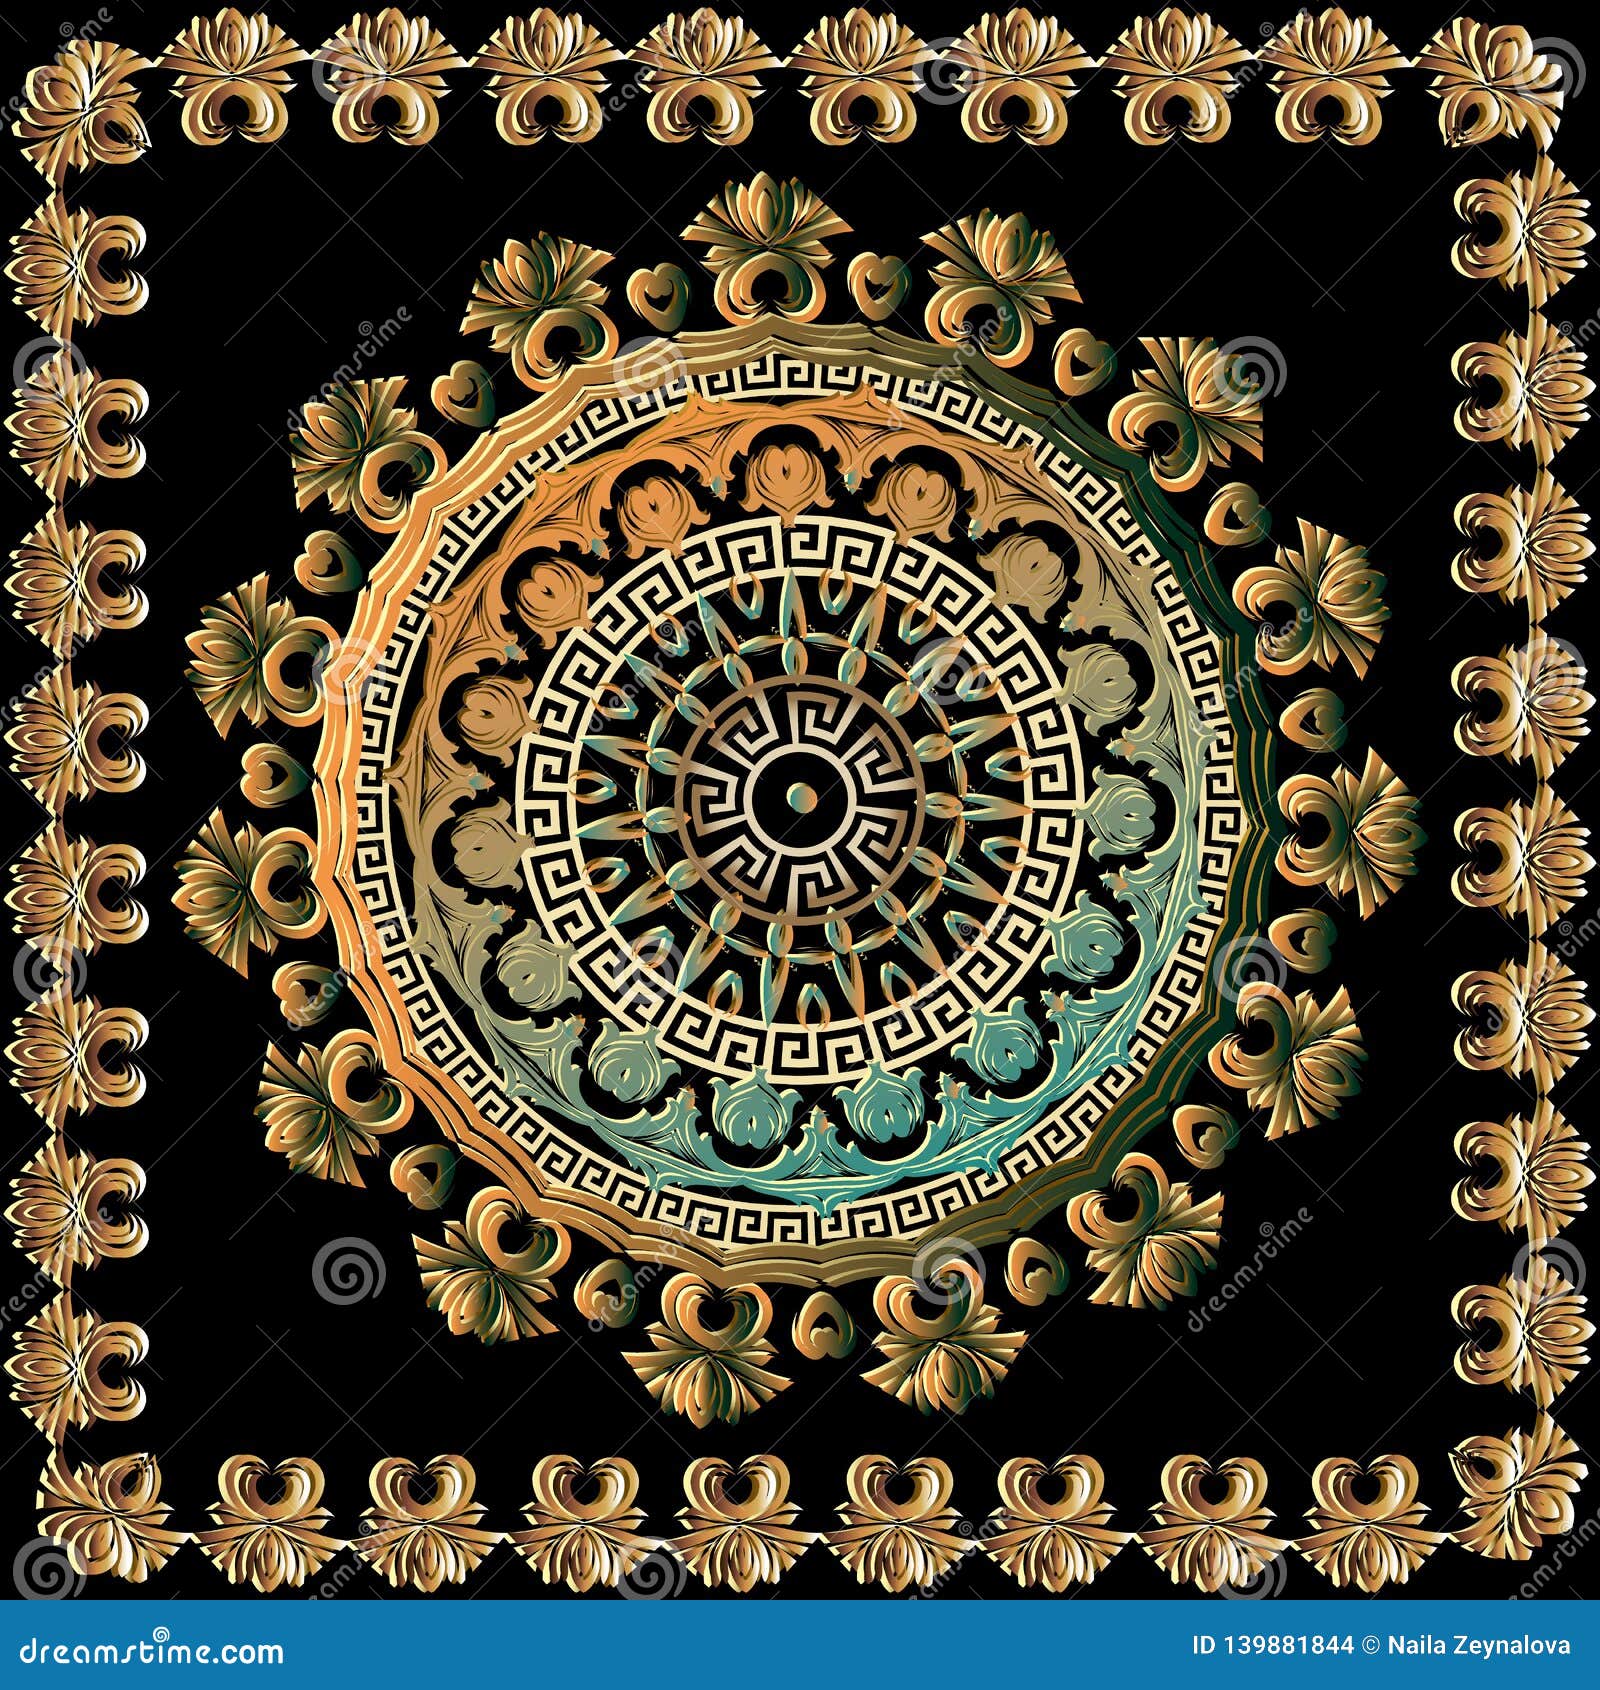 Download 3d Baroque Vector Mandala Pattern. Floral Antique Square ...